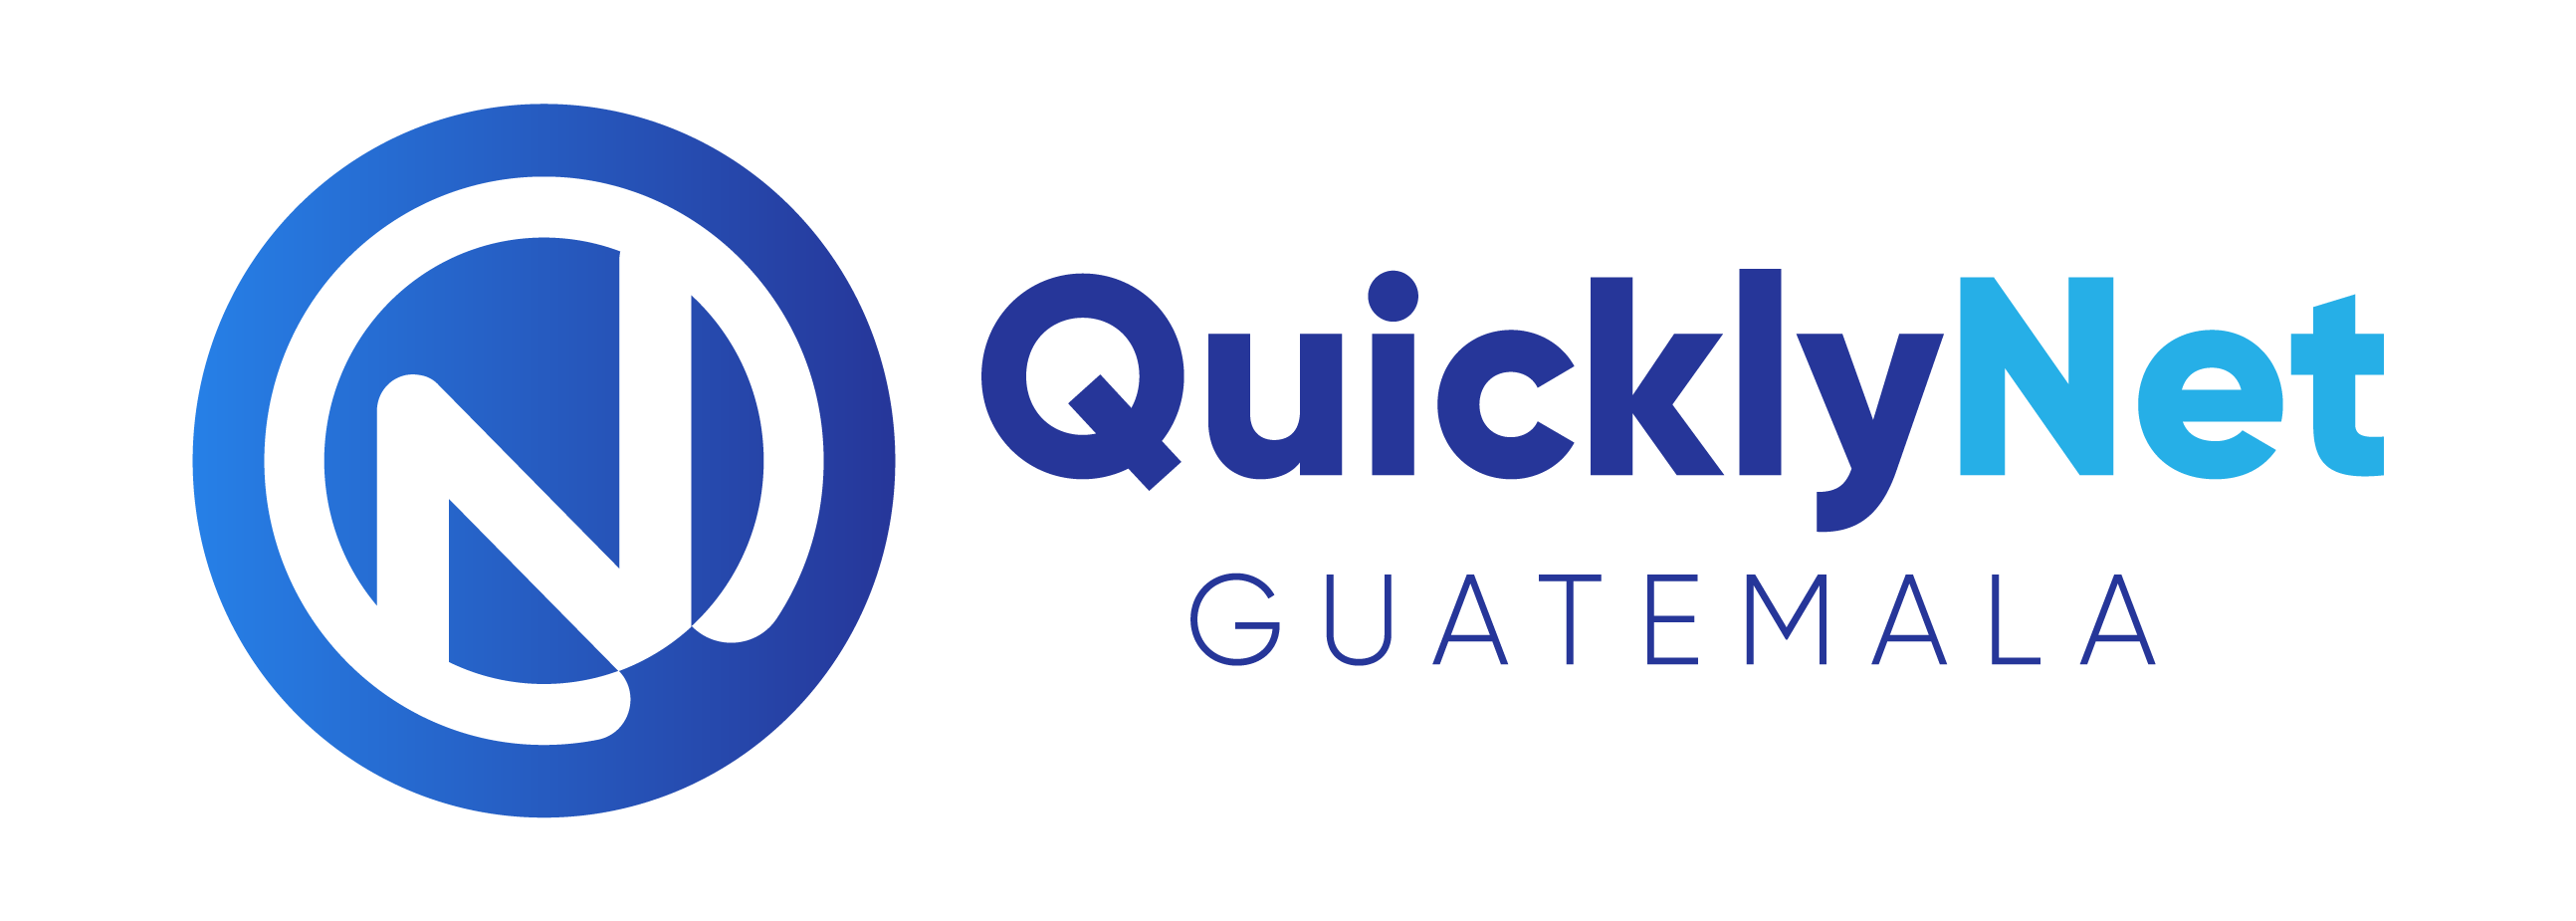 Quicklynet Guatemala